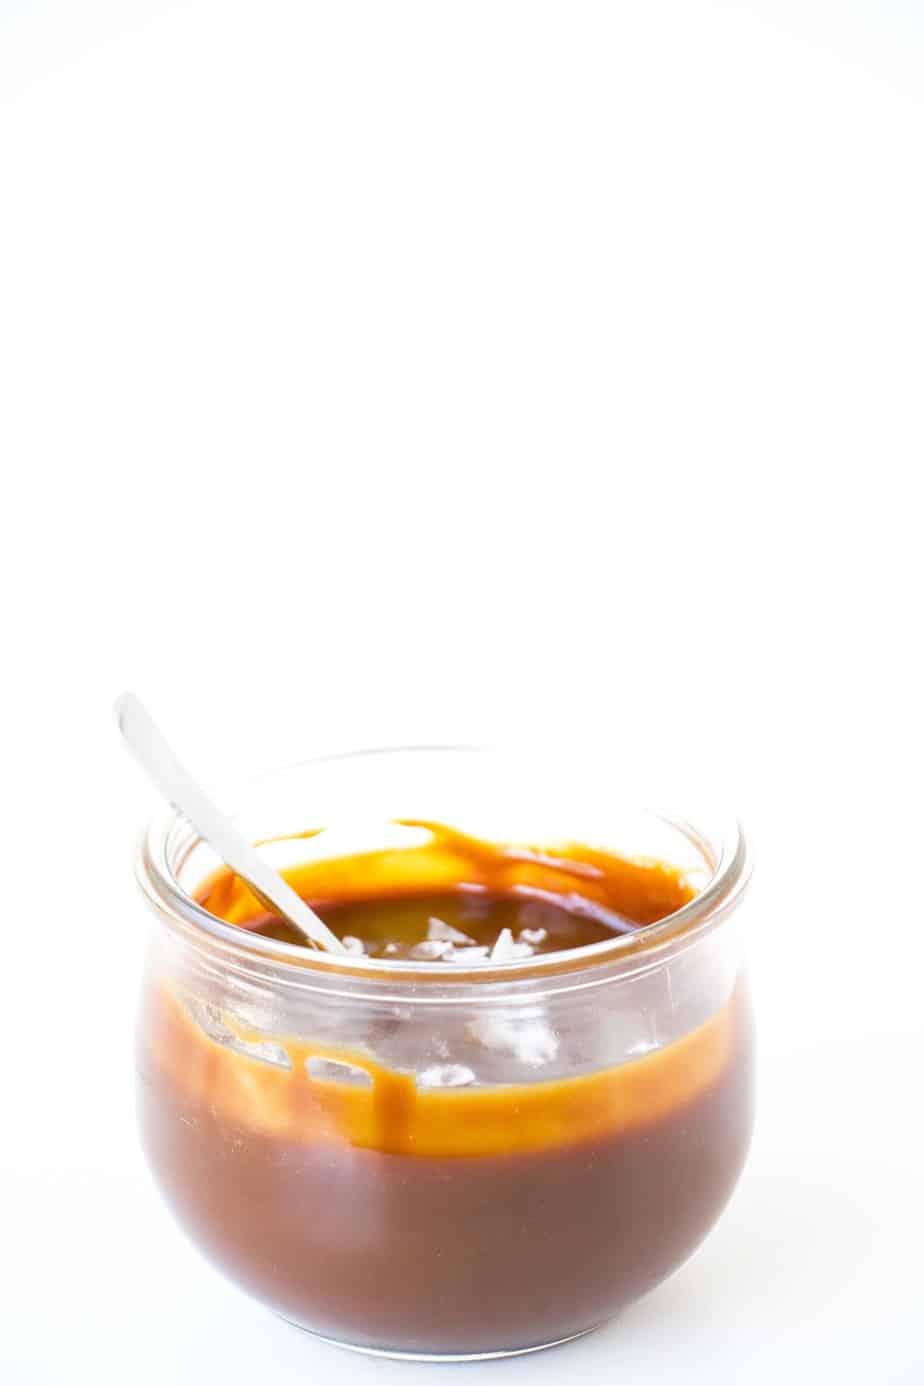 Salted Caramel Sauce in glass serving jar.